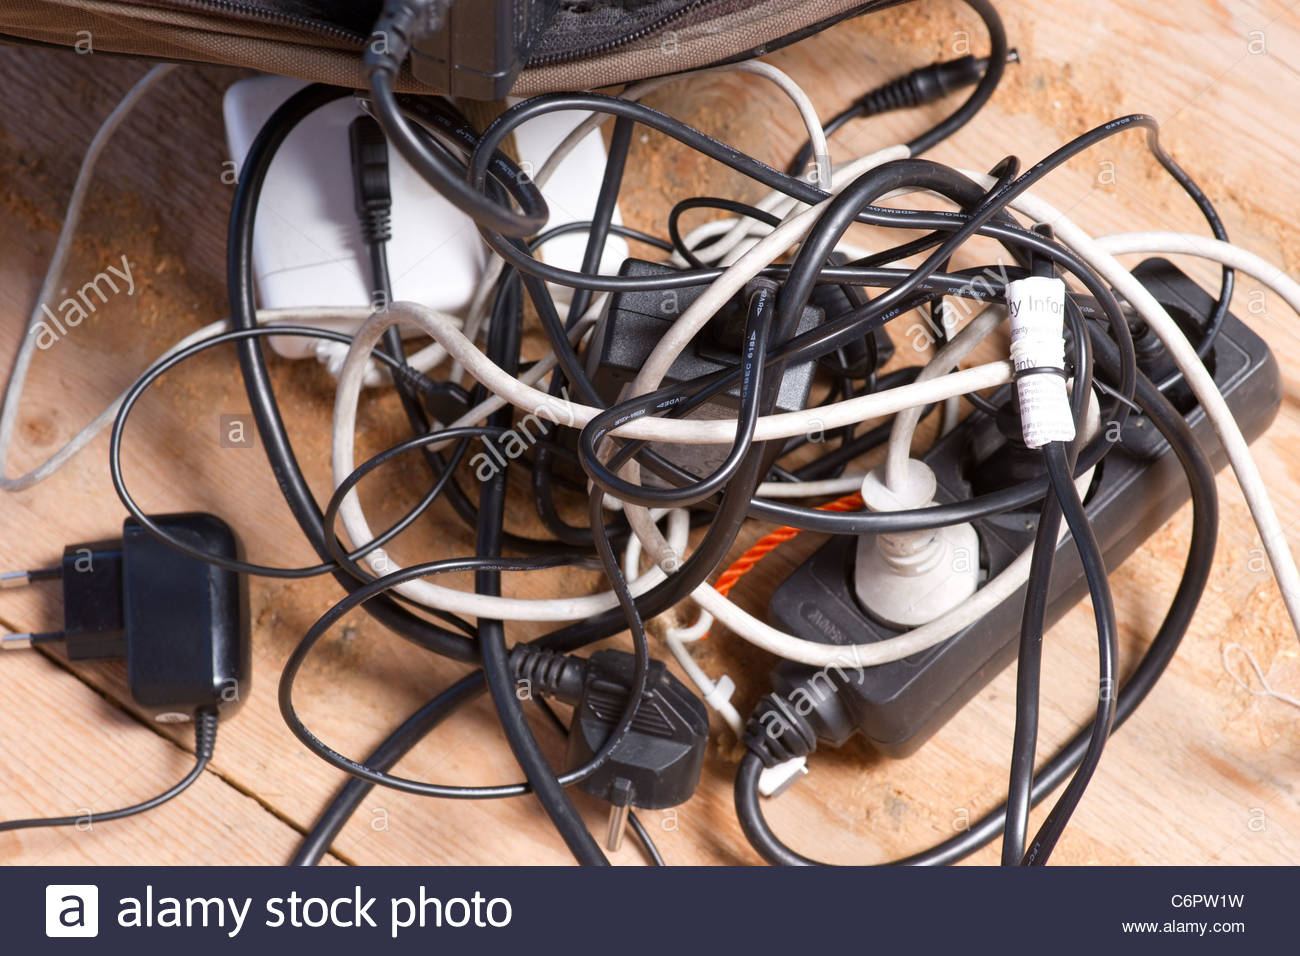 Electrical wiring Stock Photo: 38611269 - Alamy